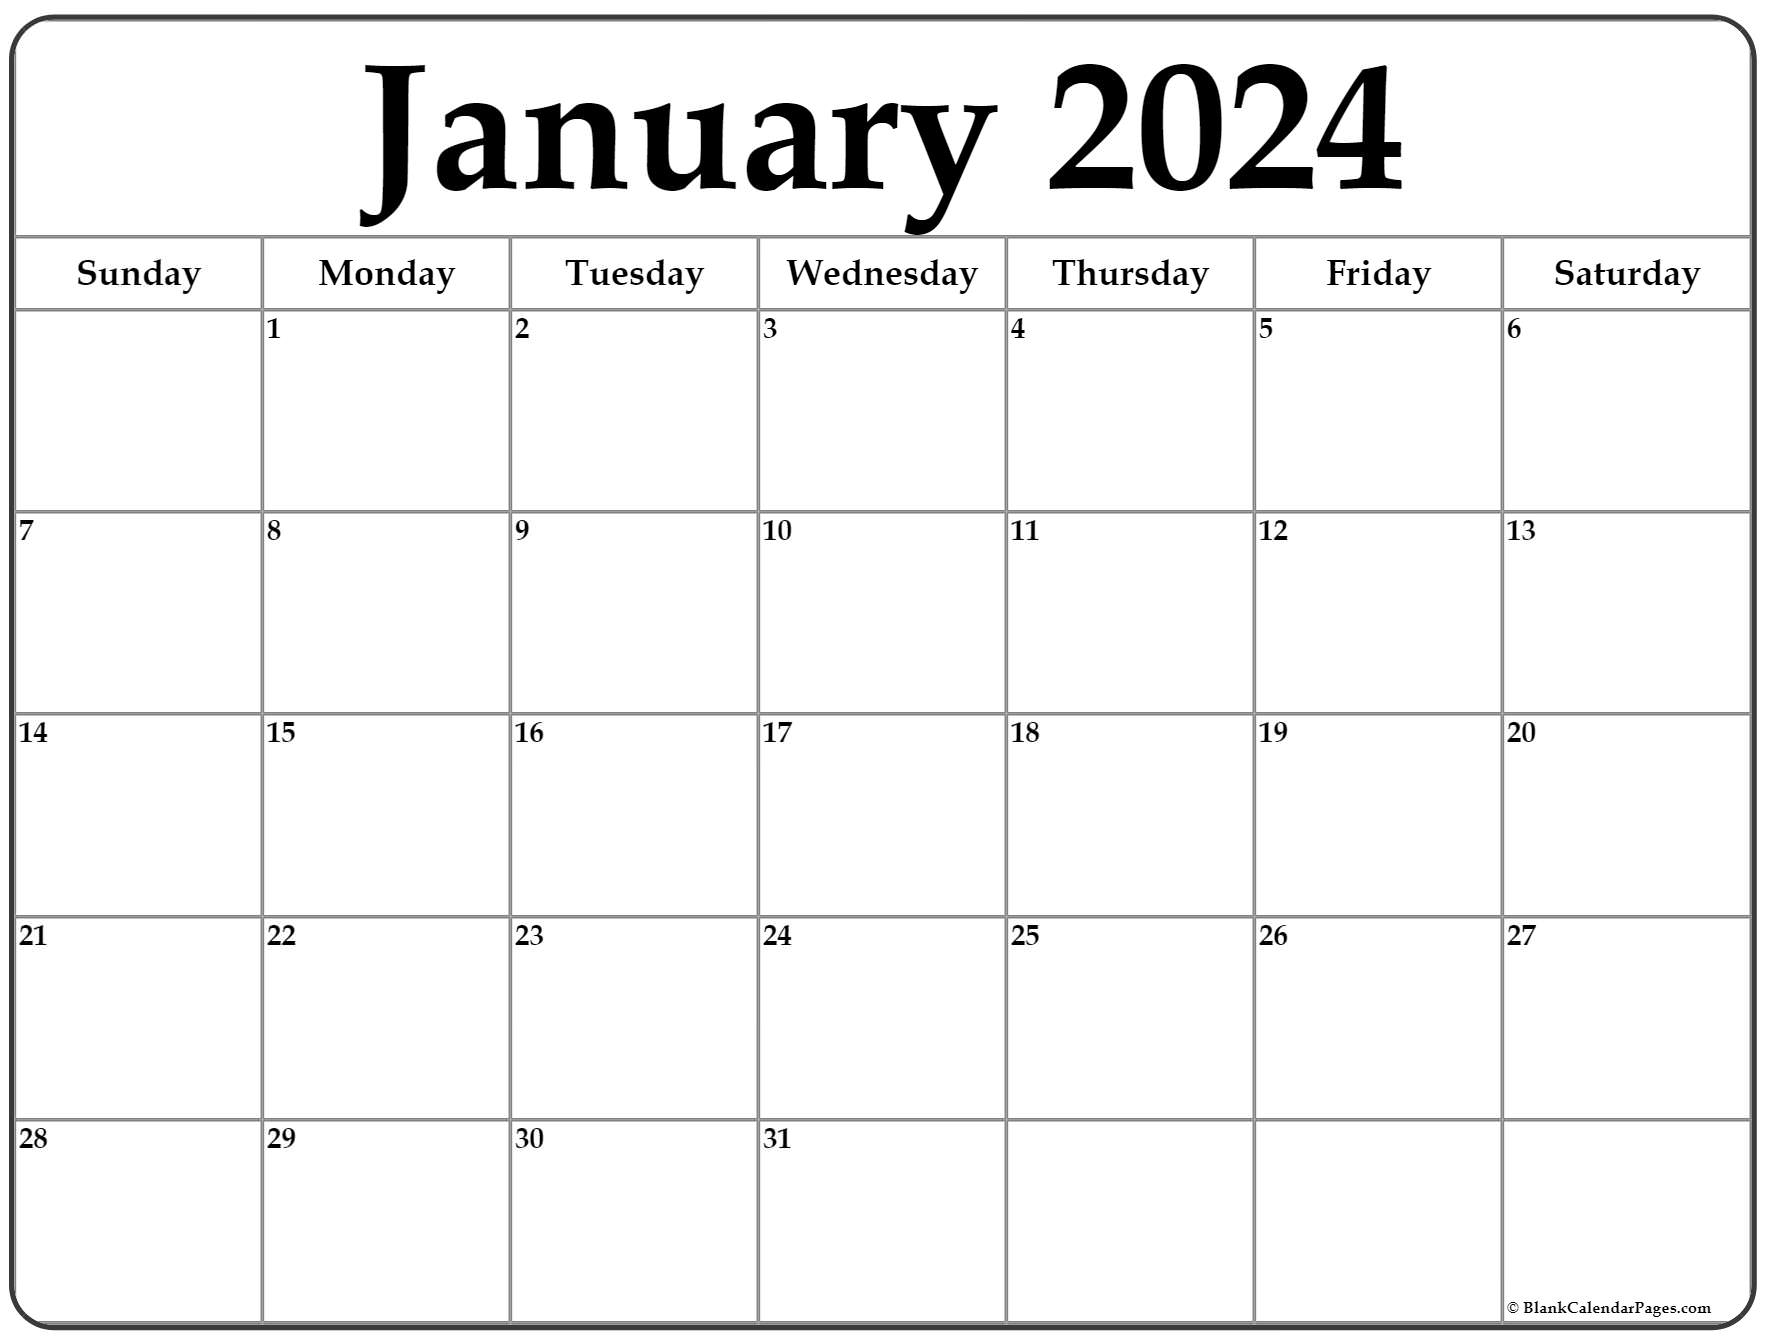 January 2024 Calendar | Free Printable Calendar for 2024 Blank Calendar Printable